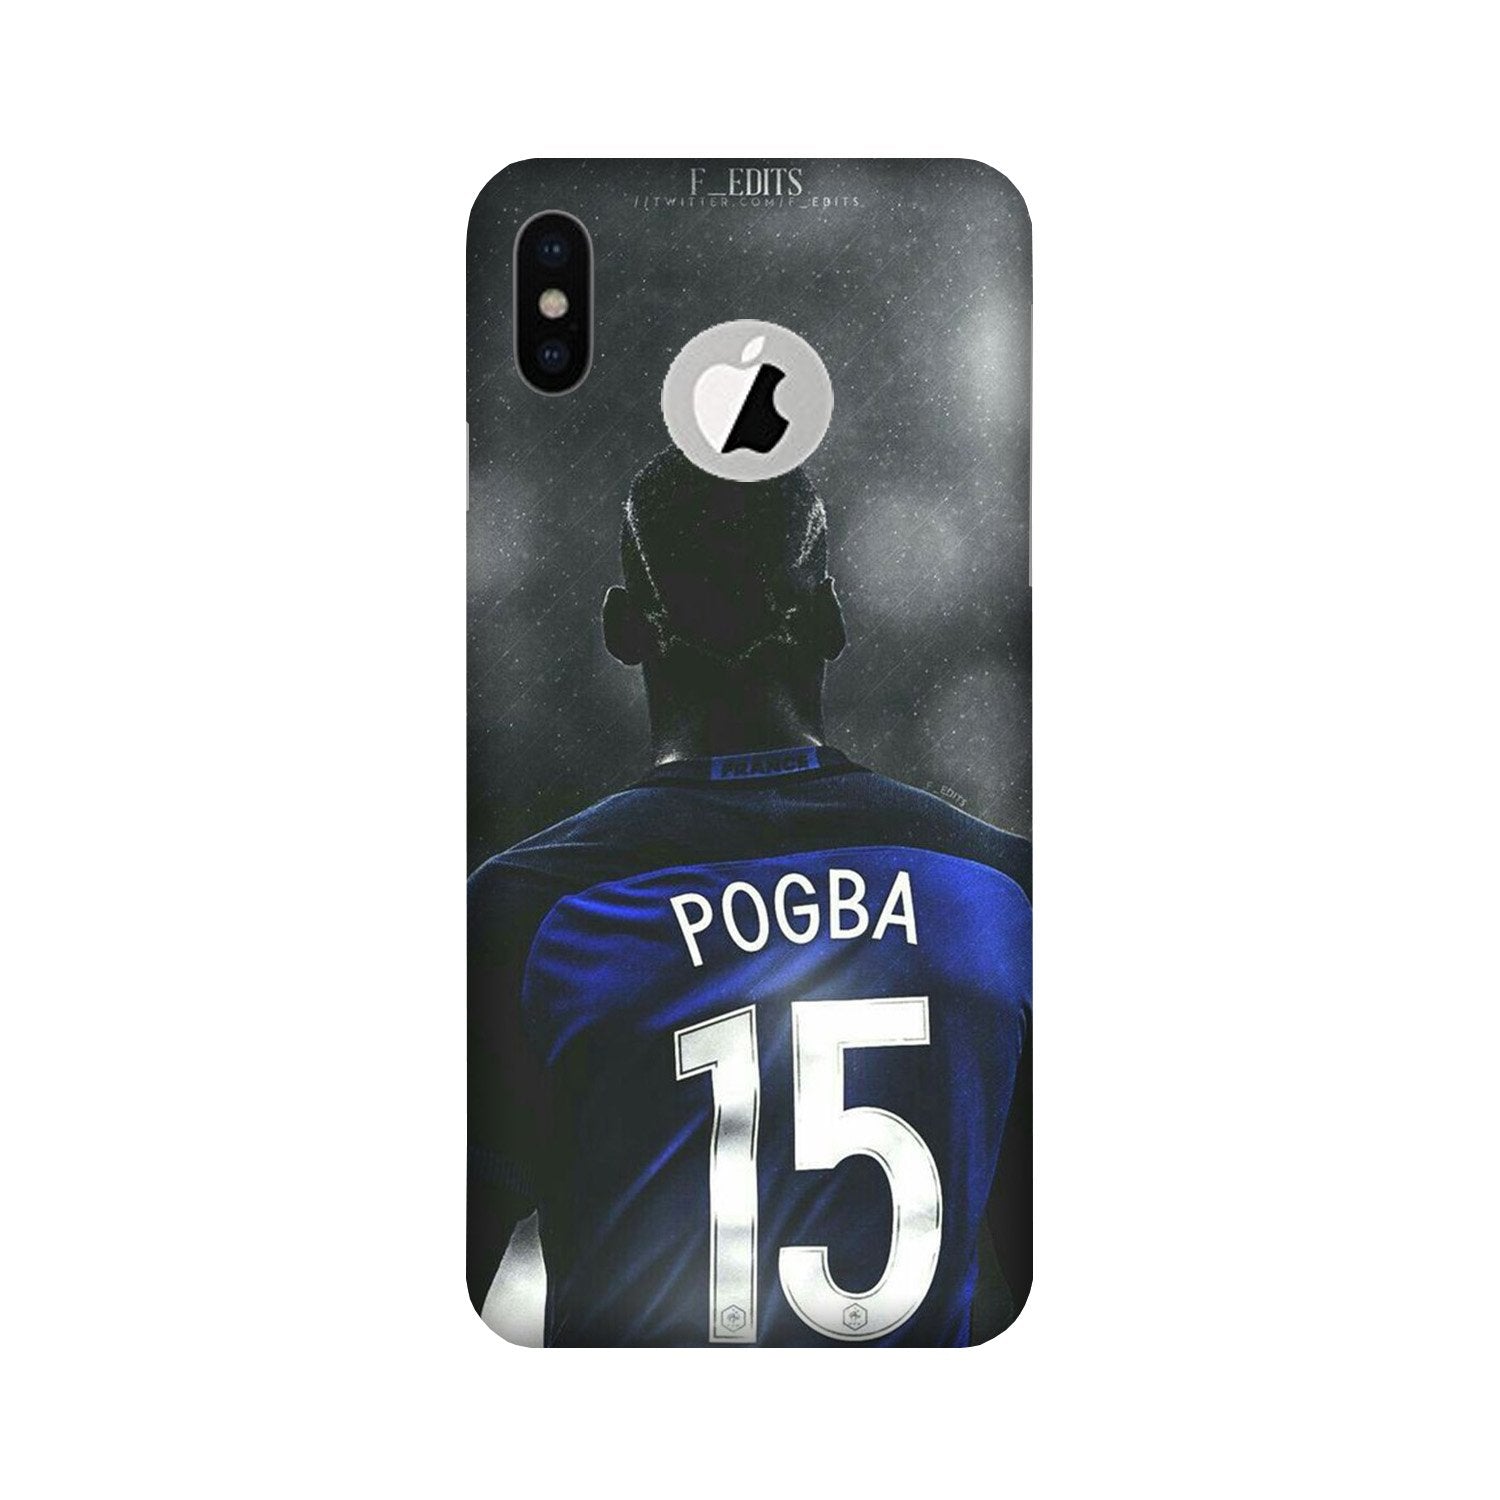 Pogba Case for iPhone X logo cut(Design - 159)